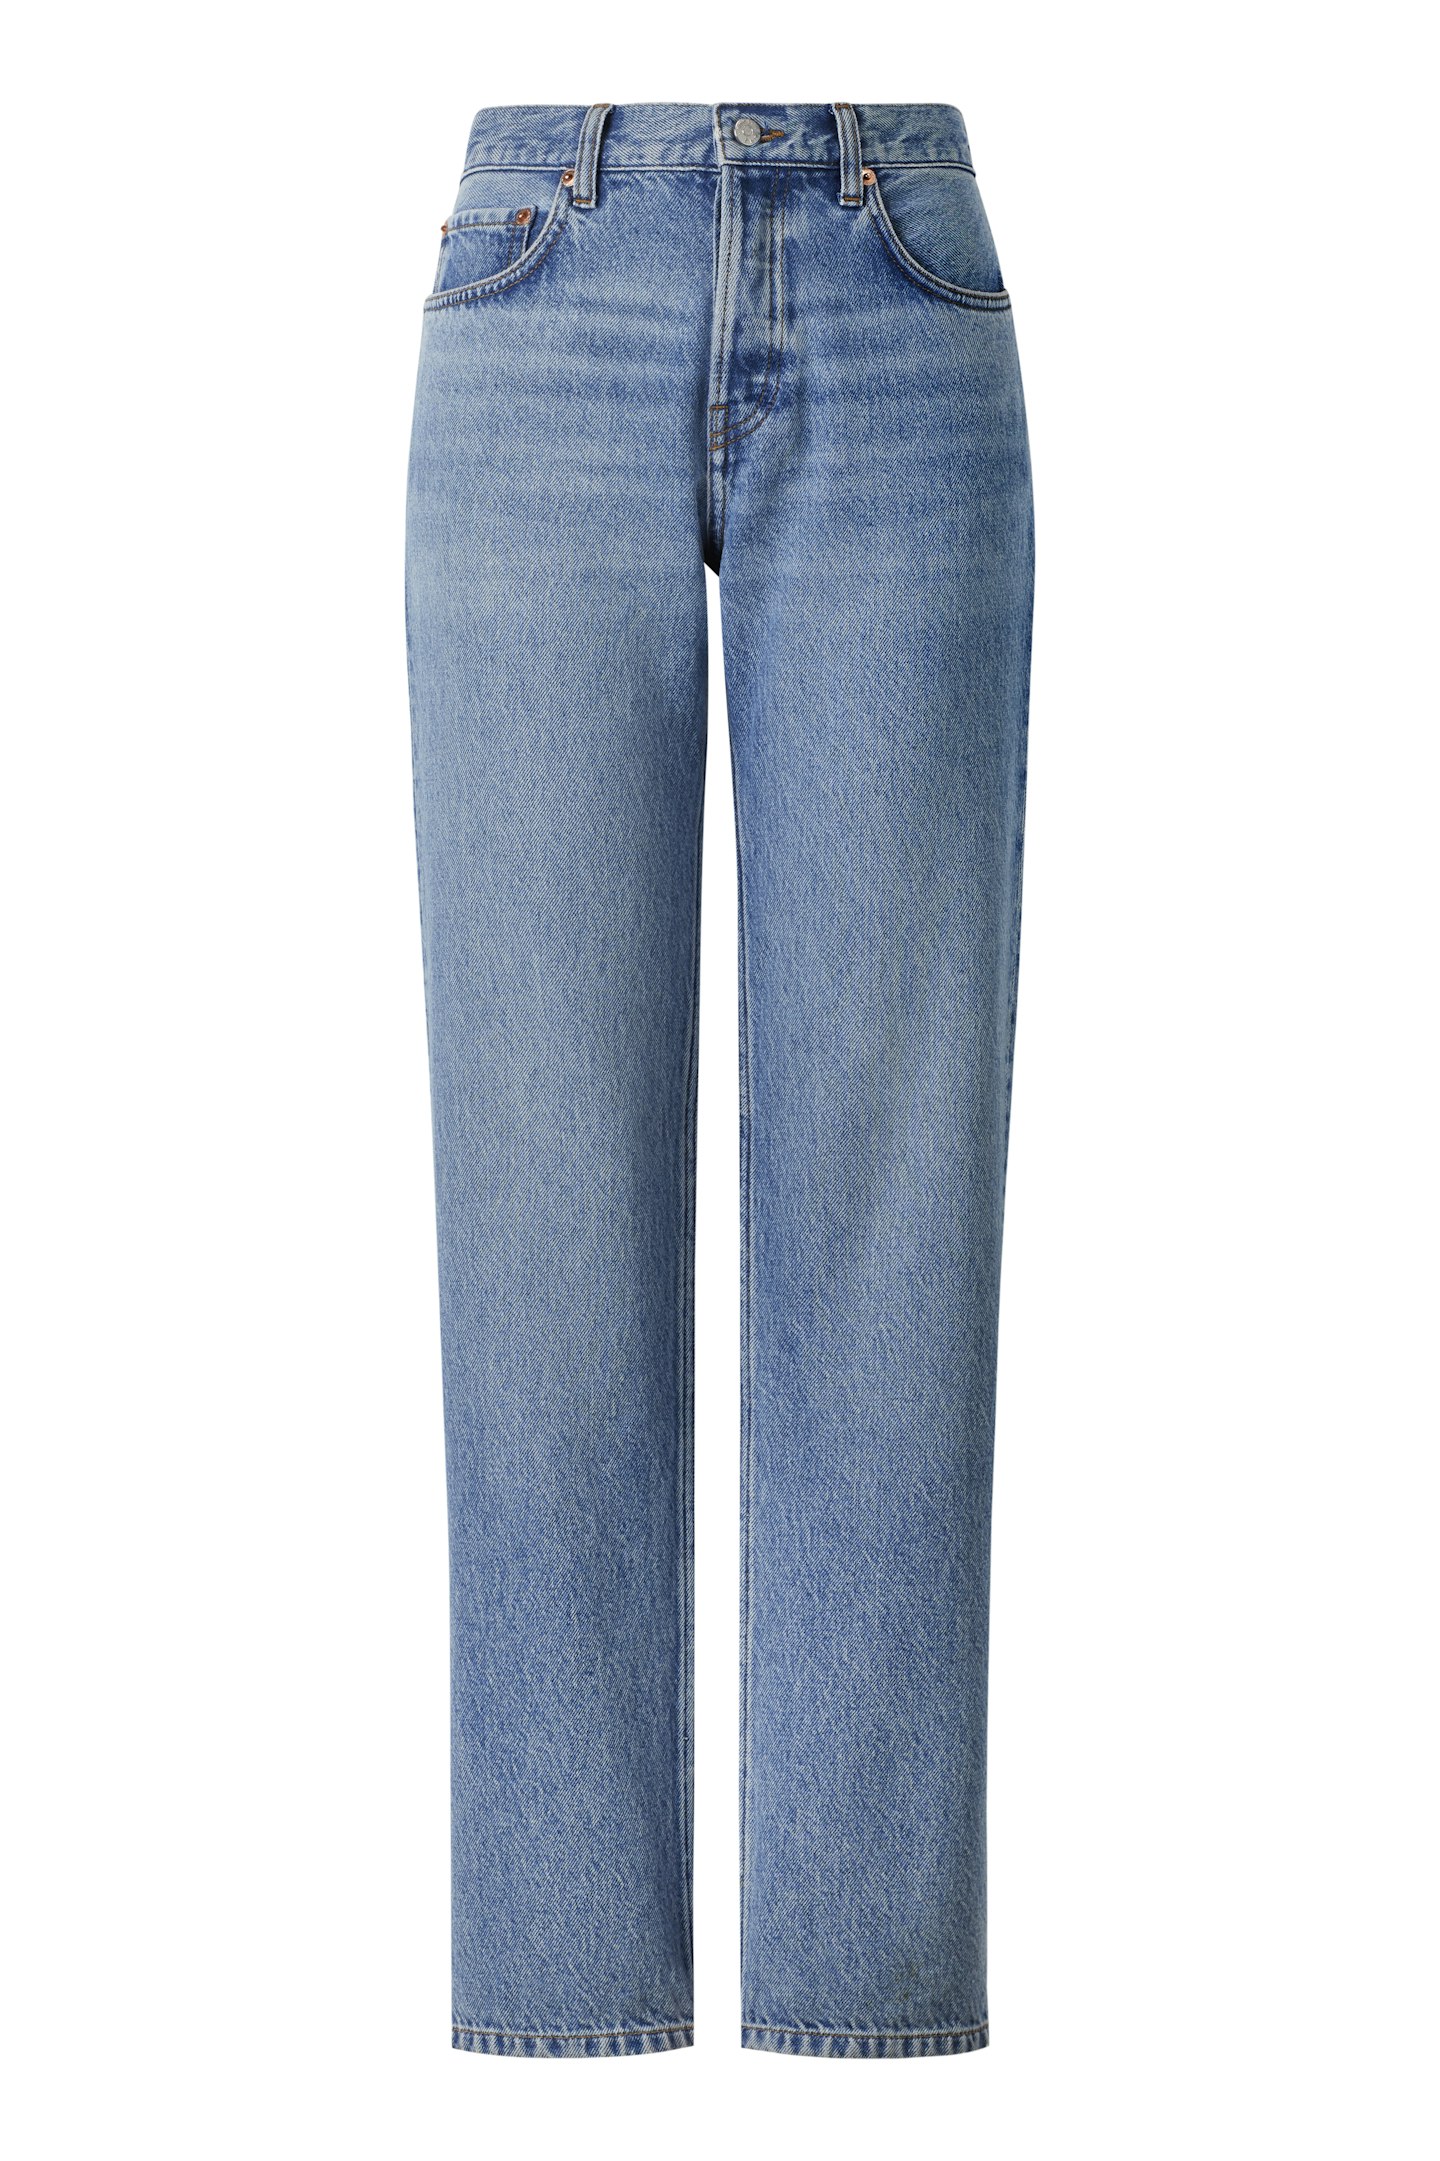 Pernille Teisbaek x Mango, High Waist Straight Jeans, £49.99